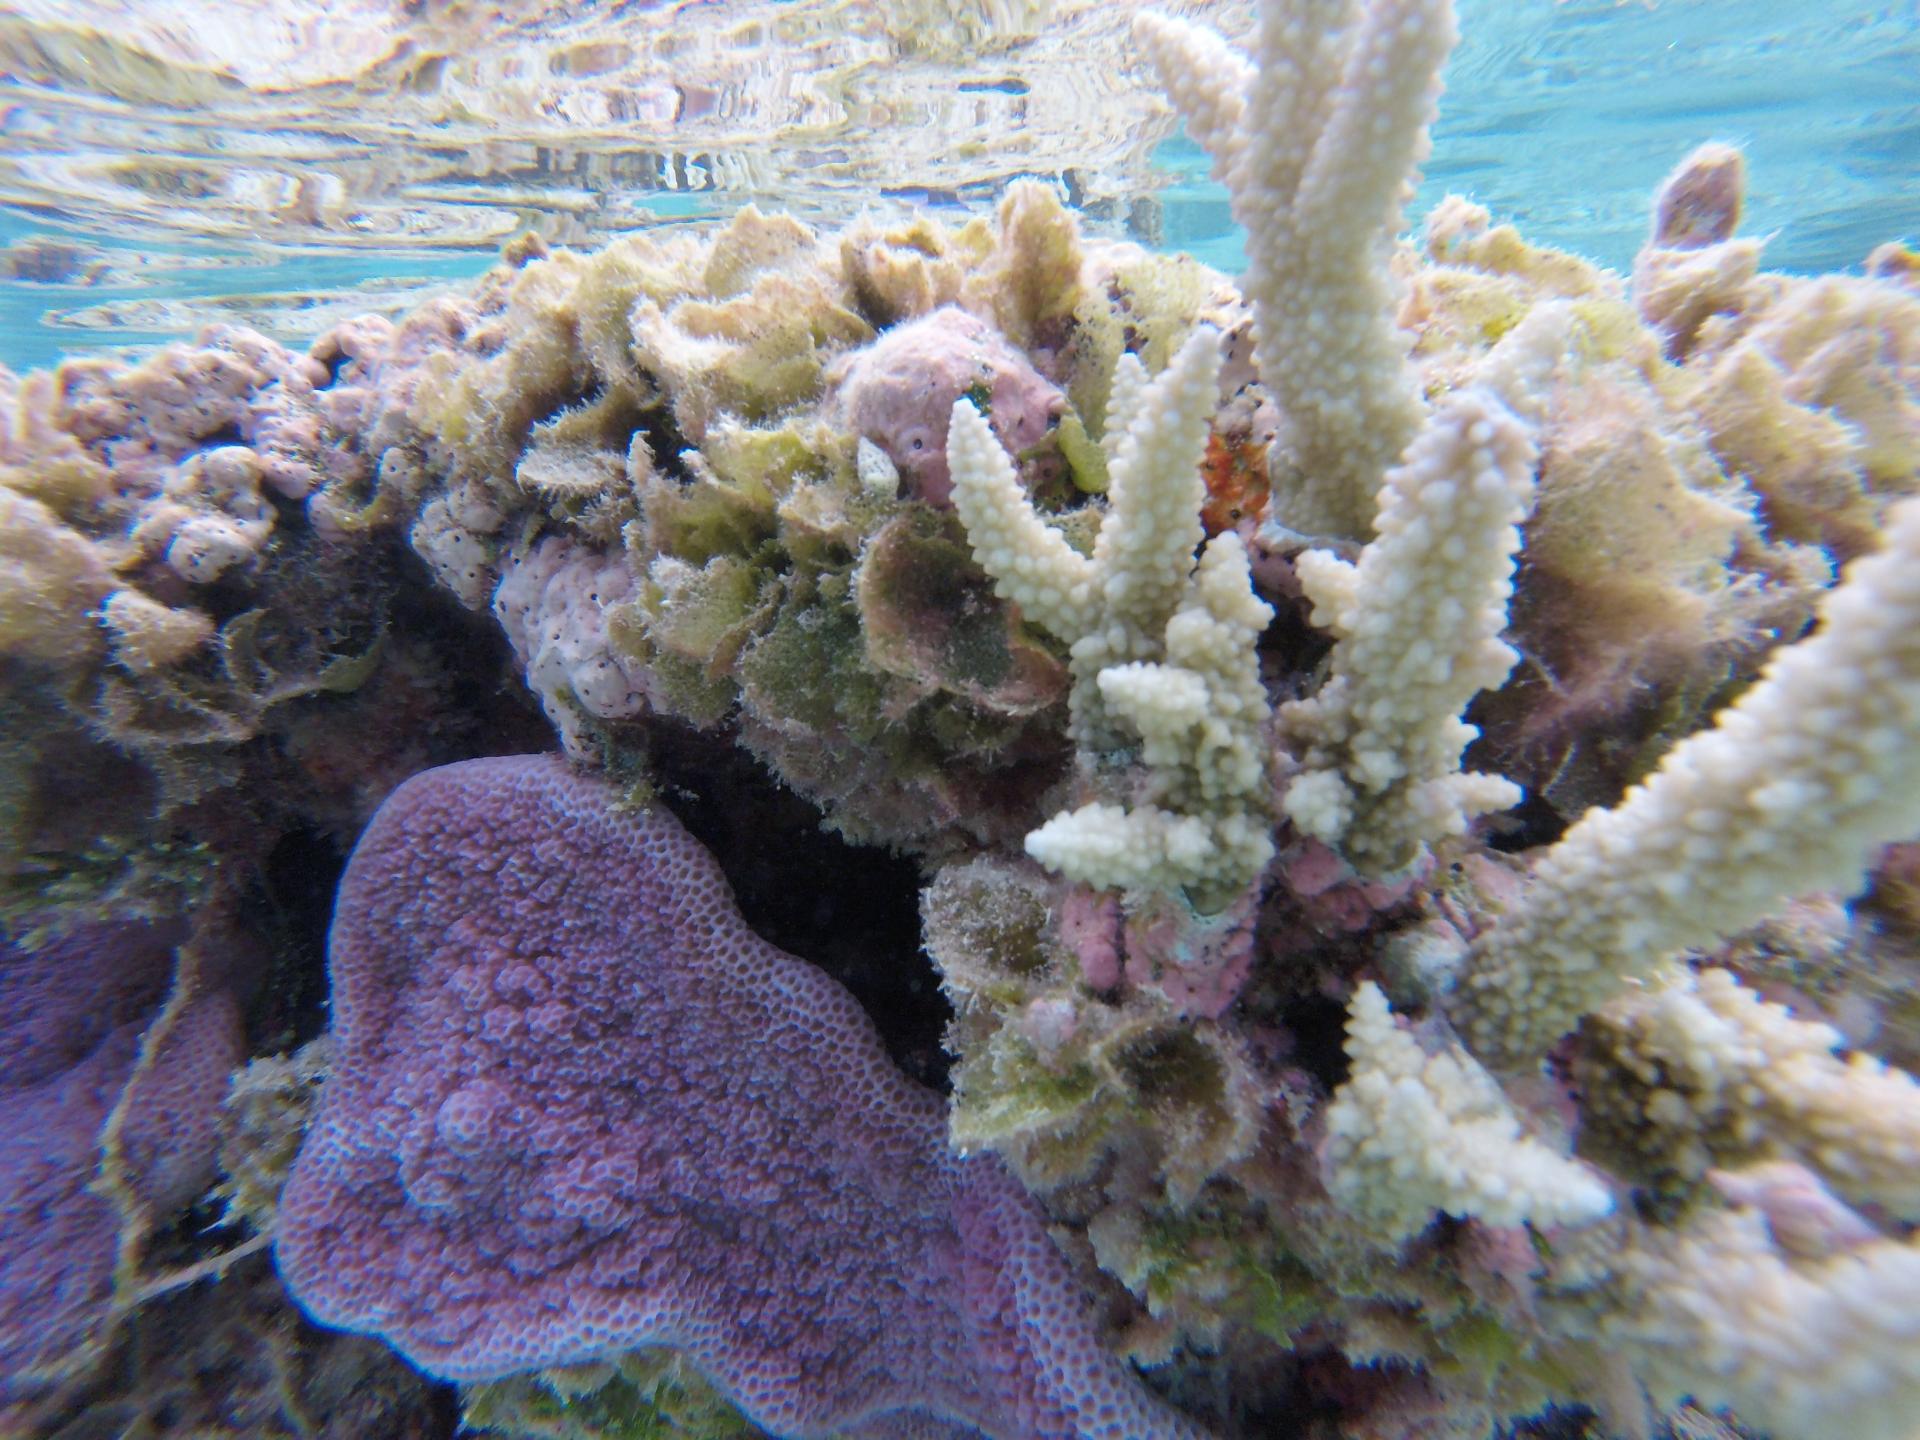 En snorkeling dans le corail